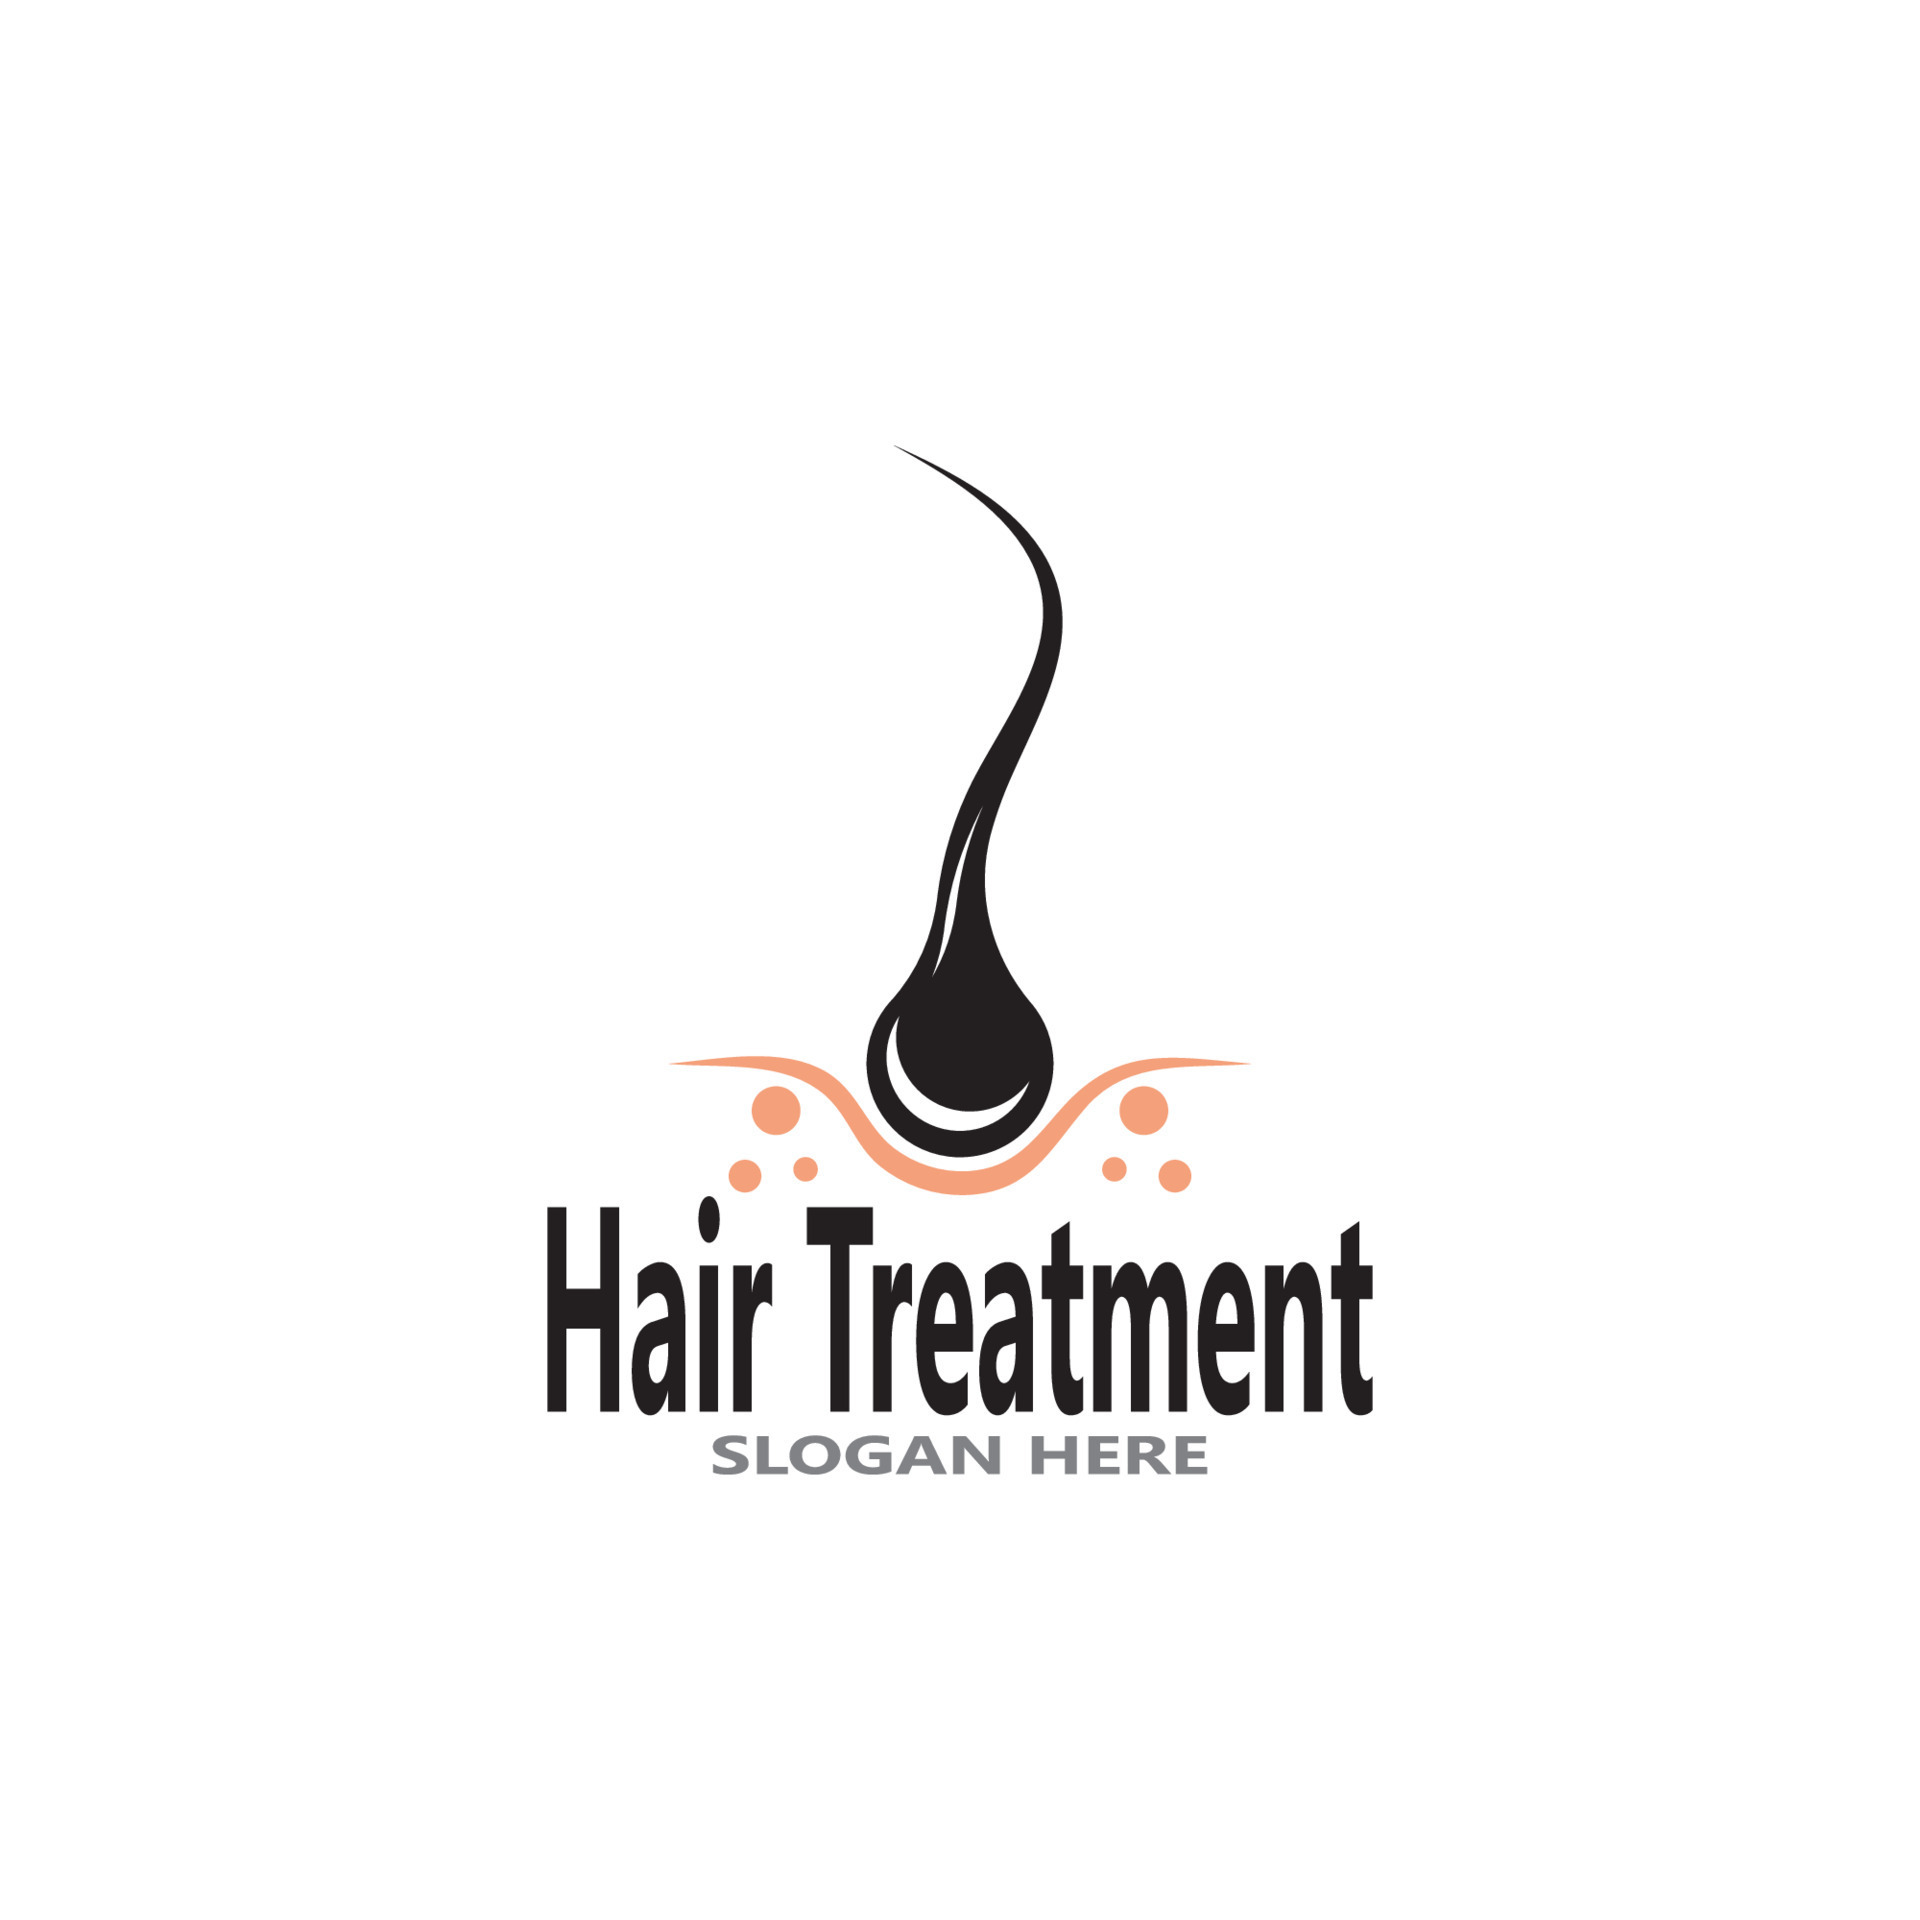 Hair treatment logo vector illustration 7265235 Vector Art at Vecteezy